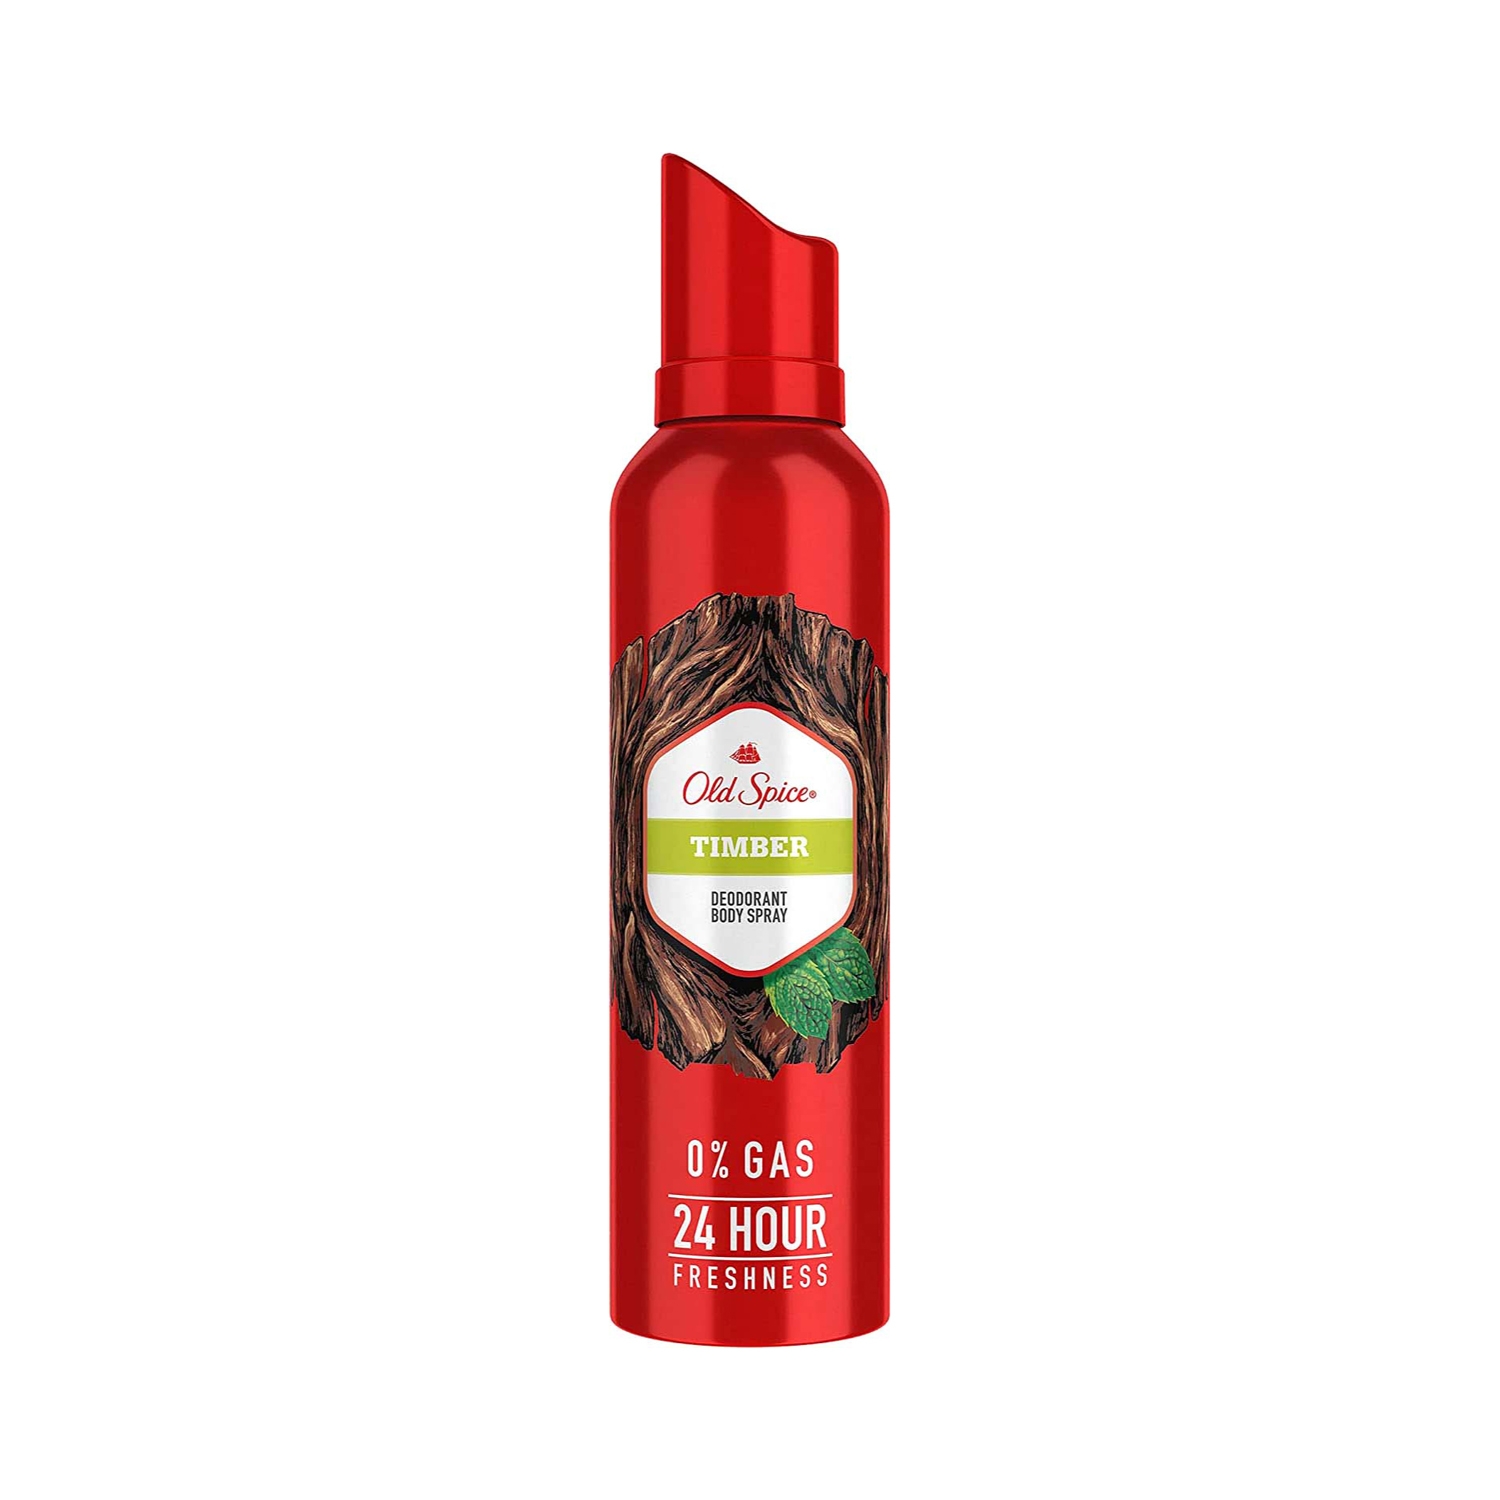 Old Spice | Old Spice Timber No Gas Deodorant Body Spray (140ml)